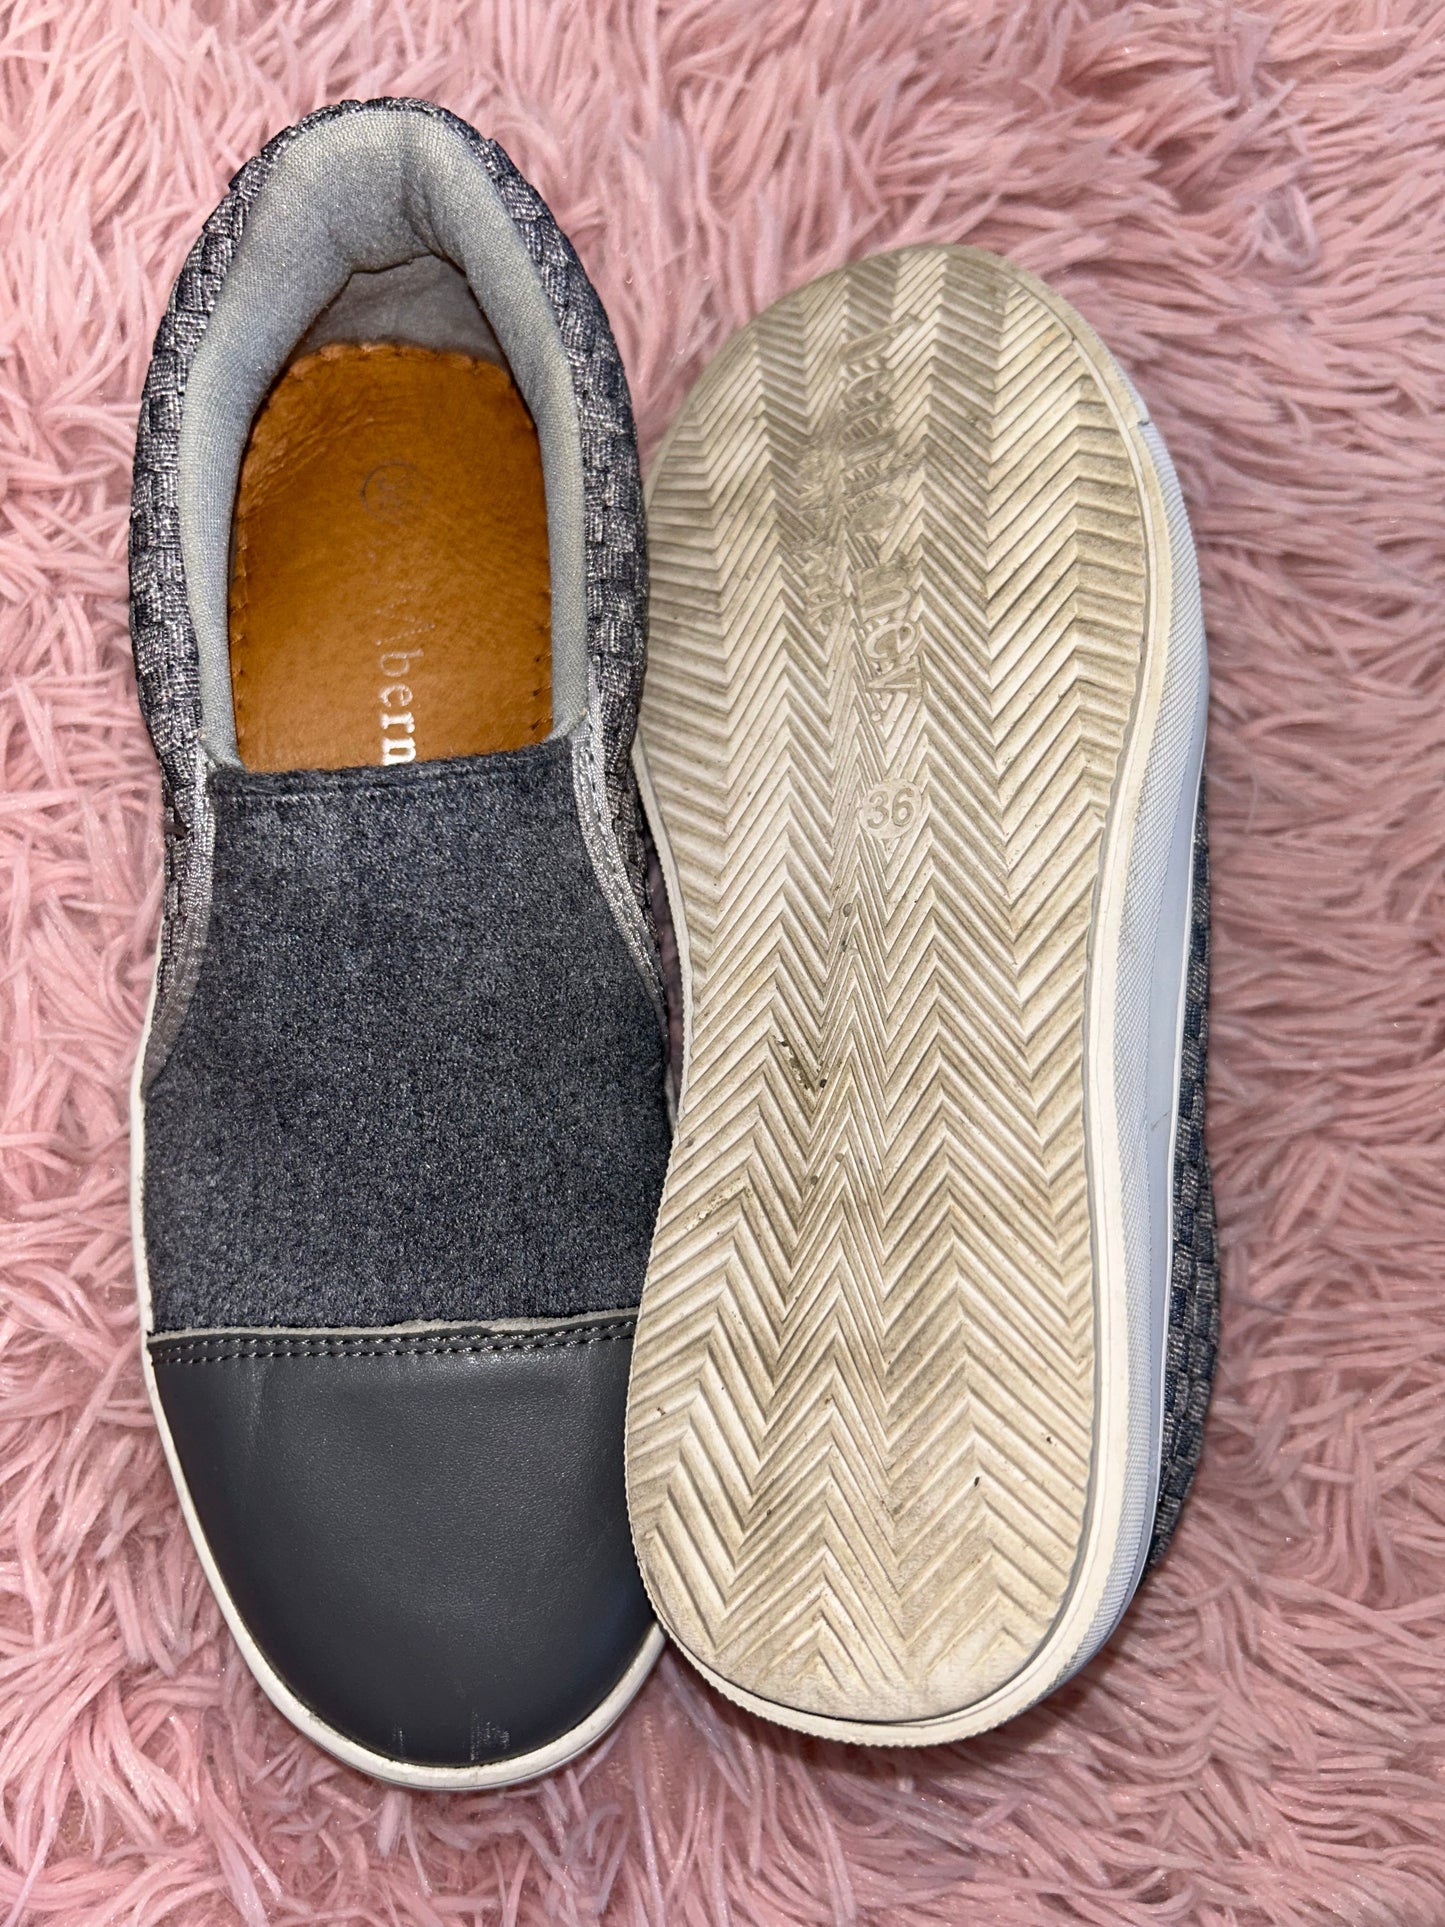 Shoes Flats Mule & Slide By Bernie Mev  Size: 6